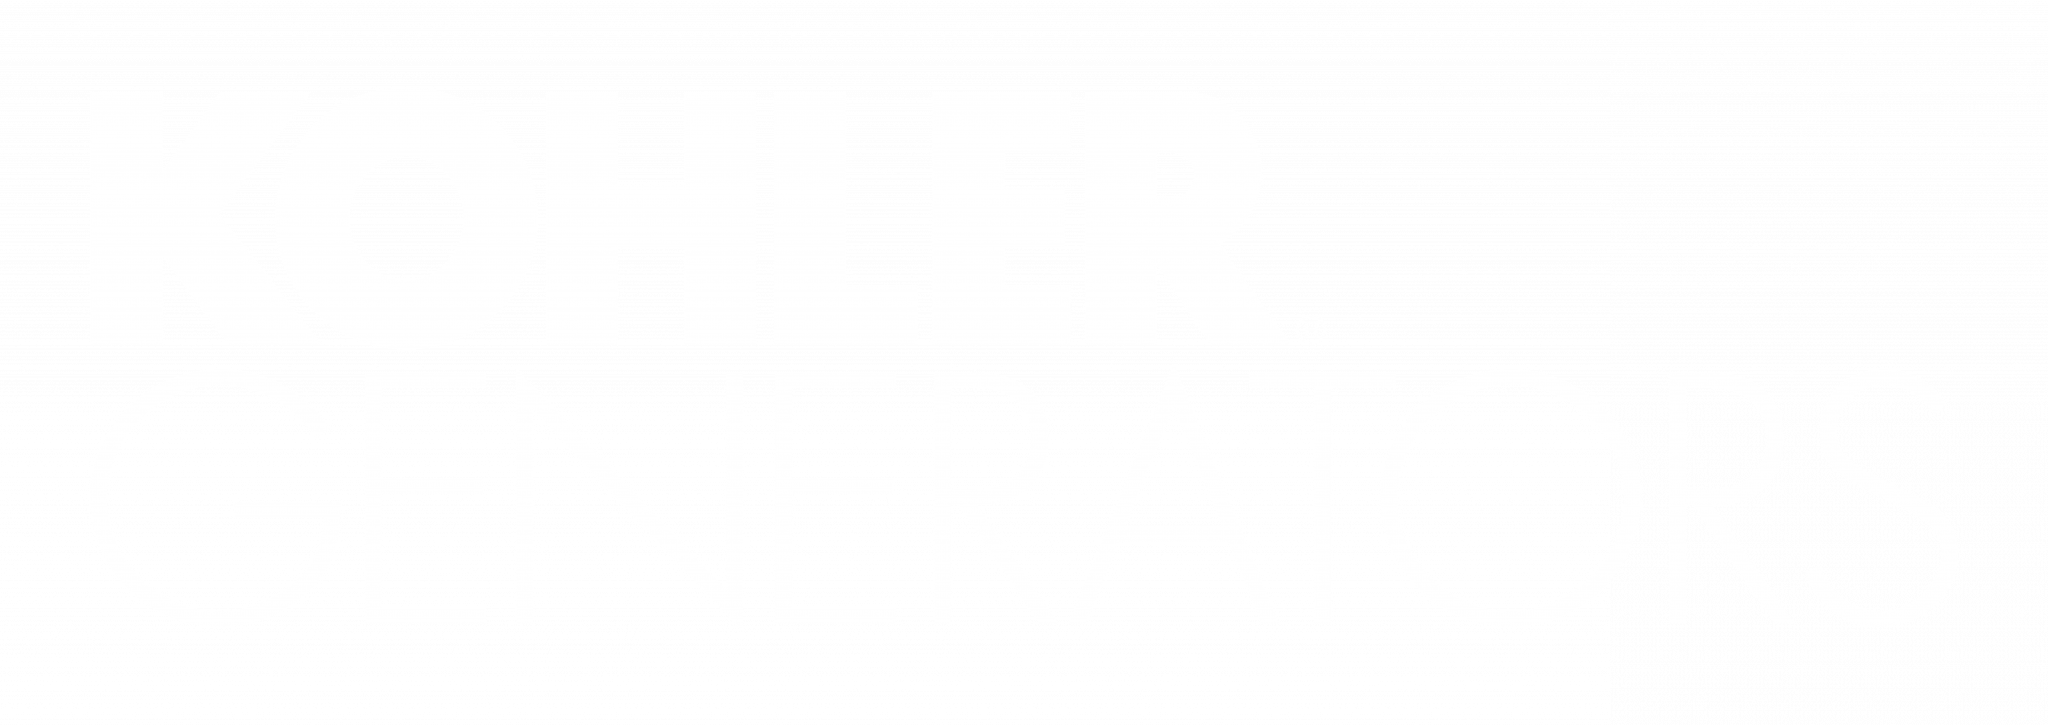 kohler-generator-distributor-capability-resources